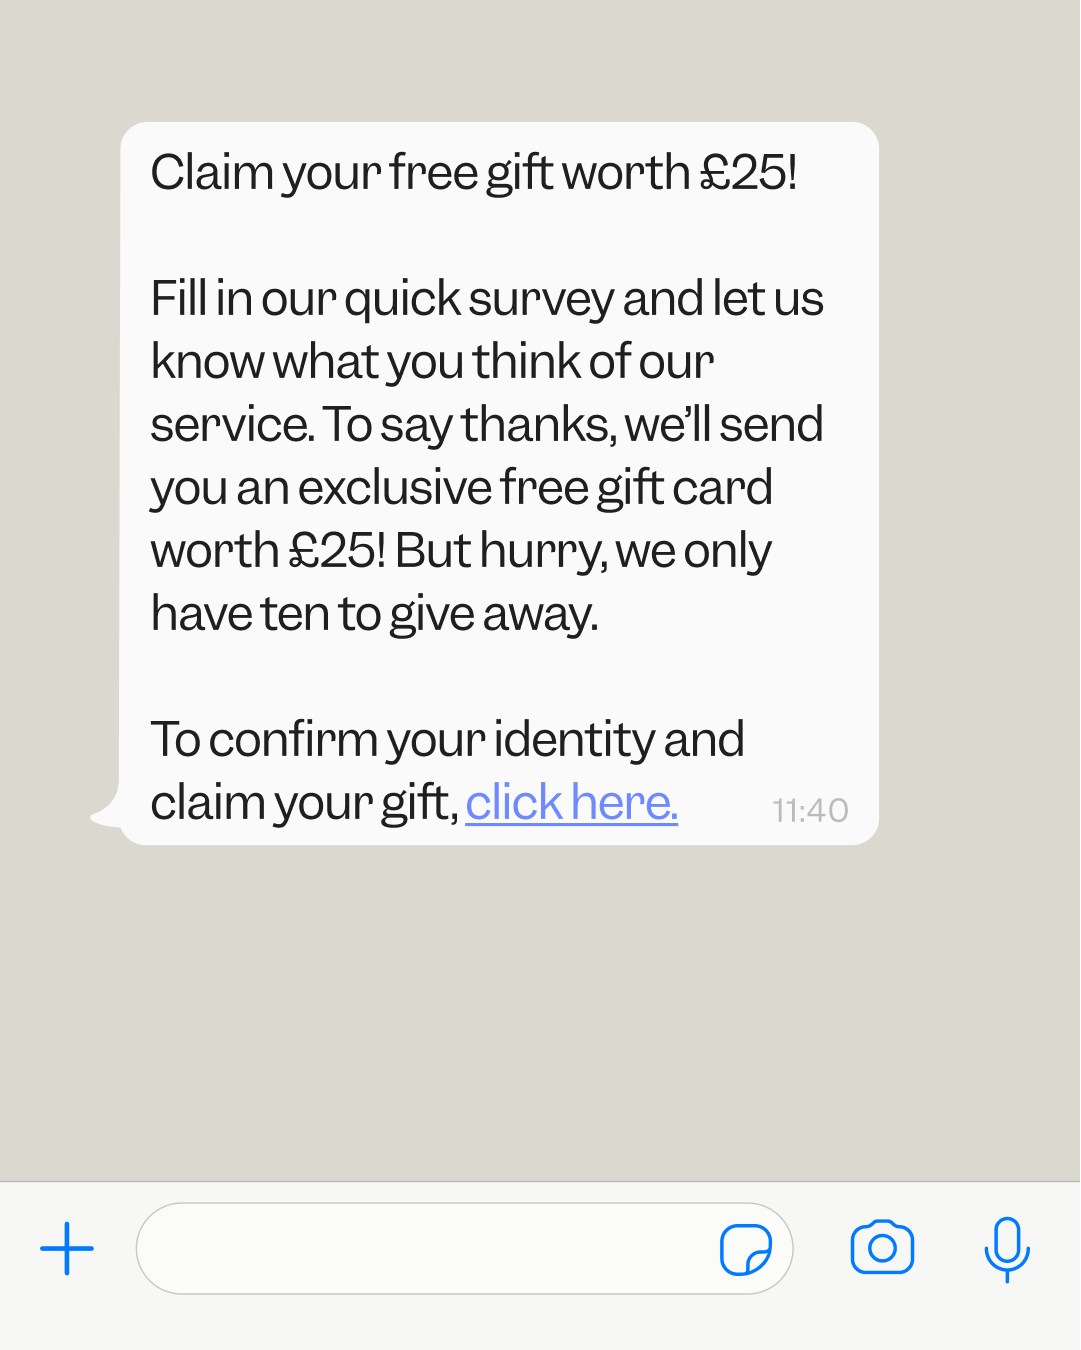 WhatsApp free gift scam